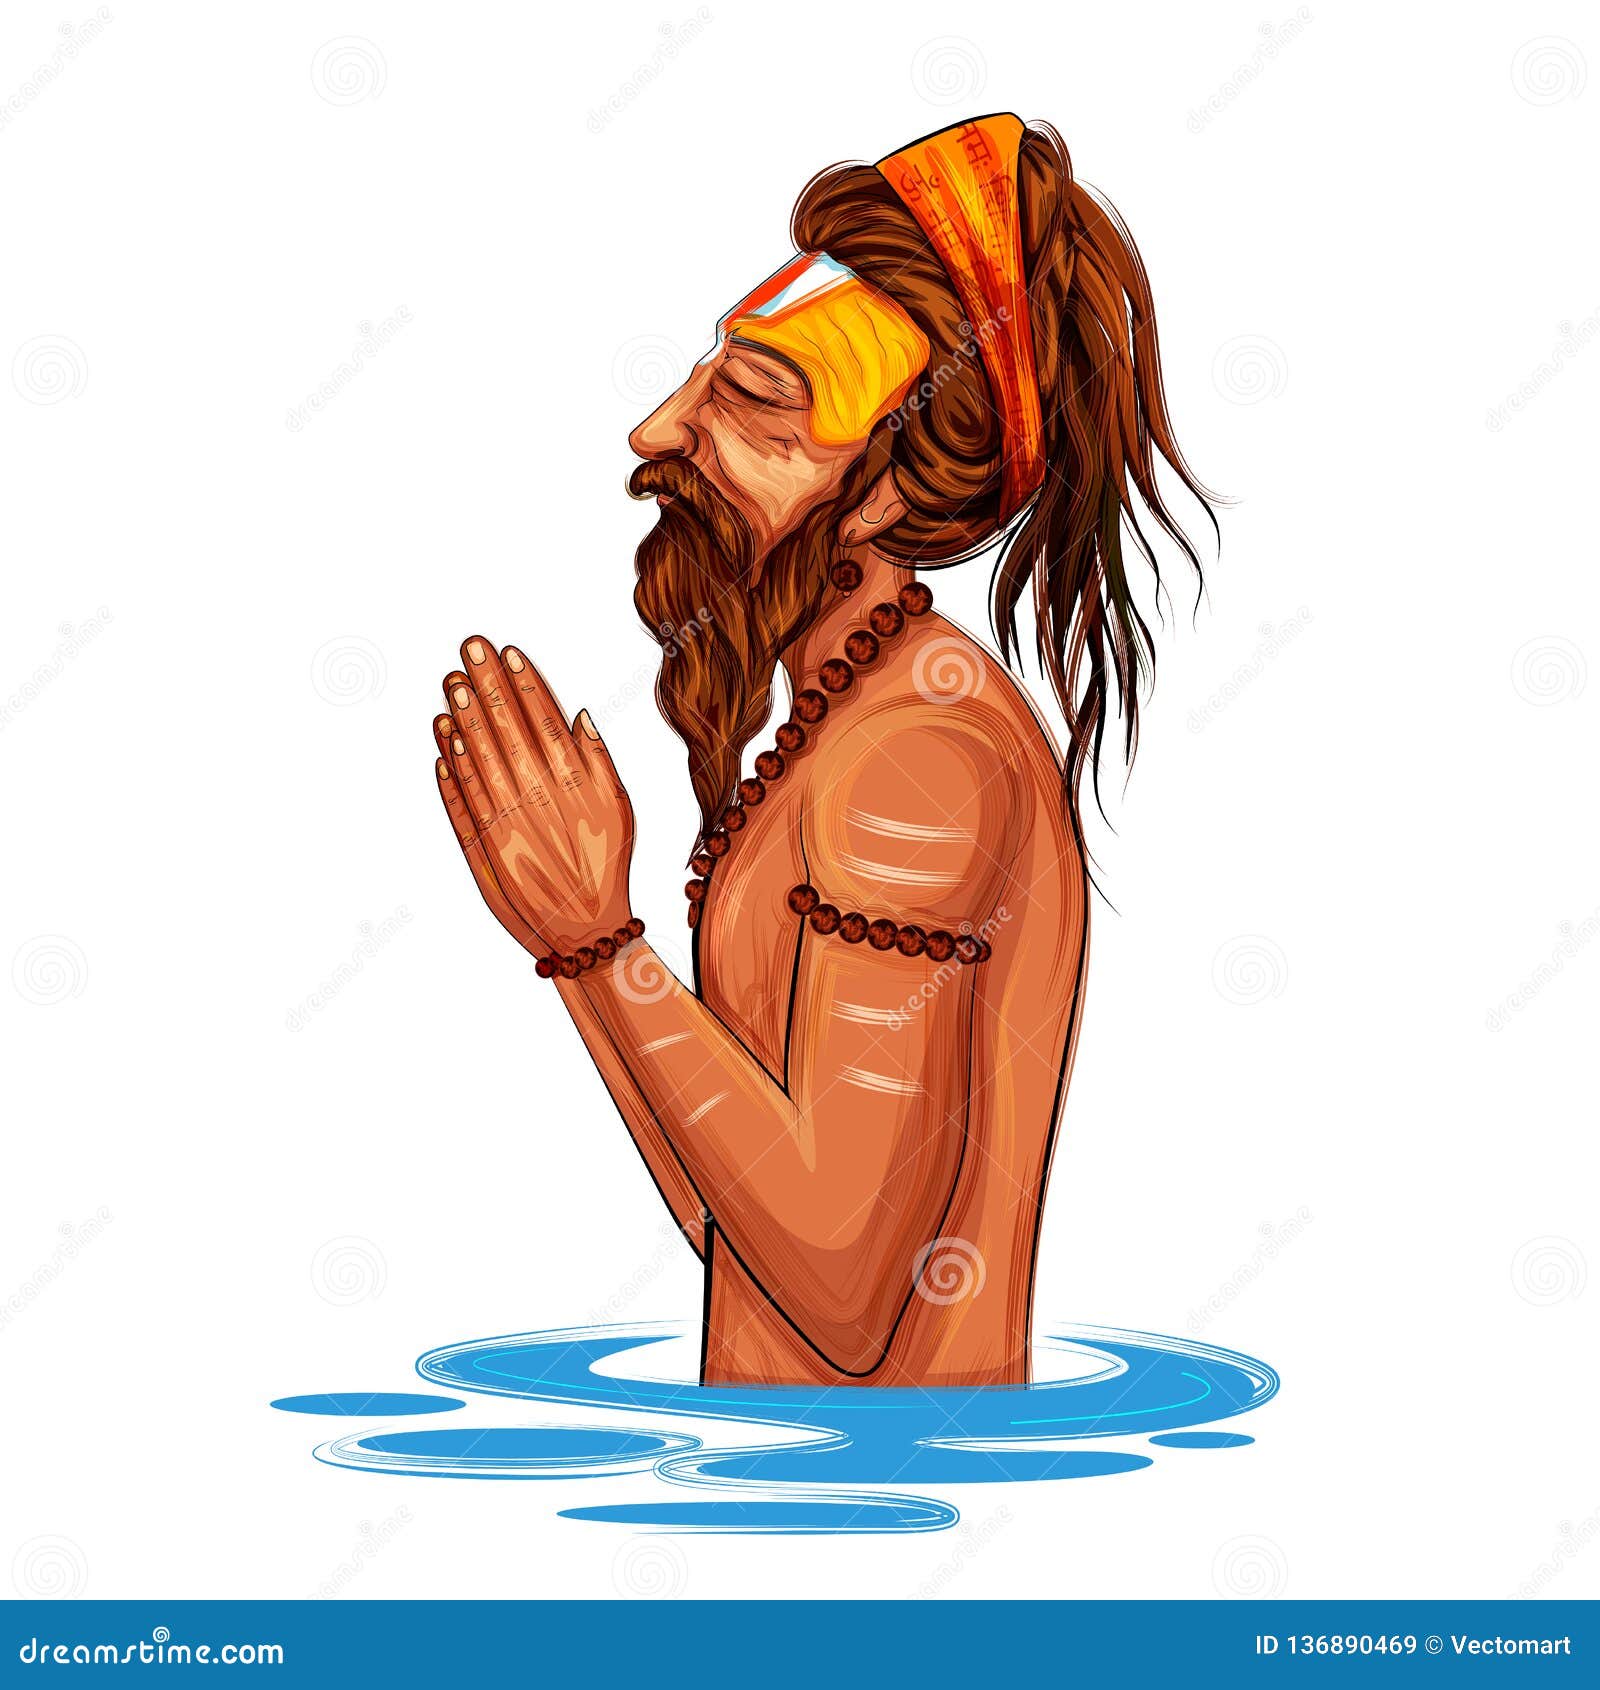 sadhu saint of india for grand festival and hindi text kumbh mela